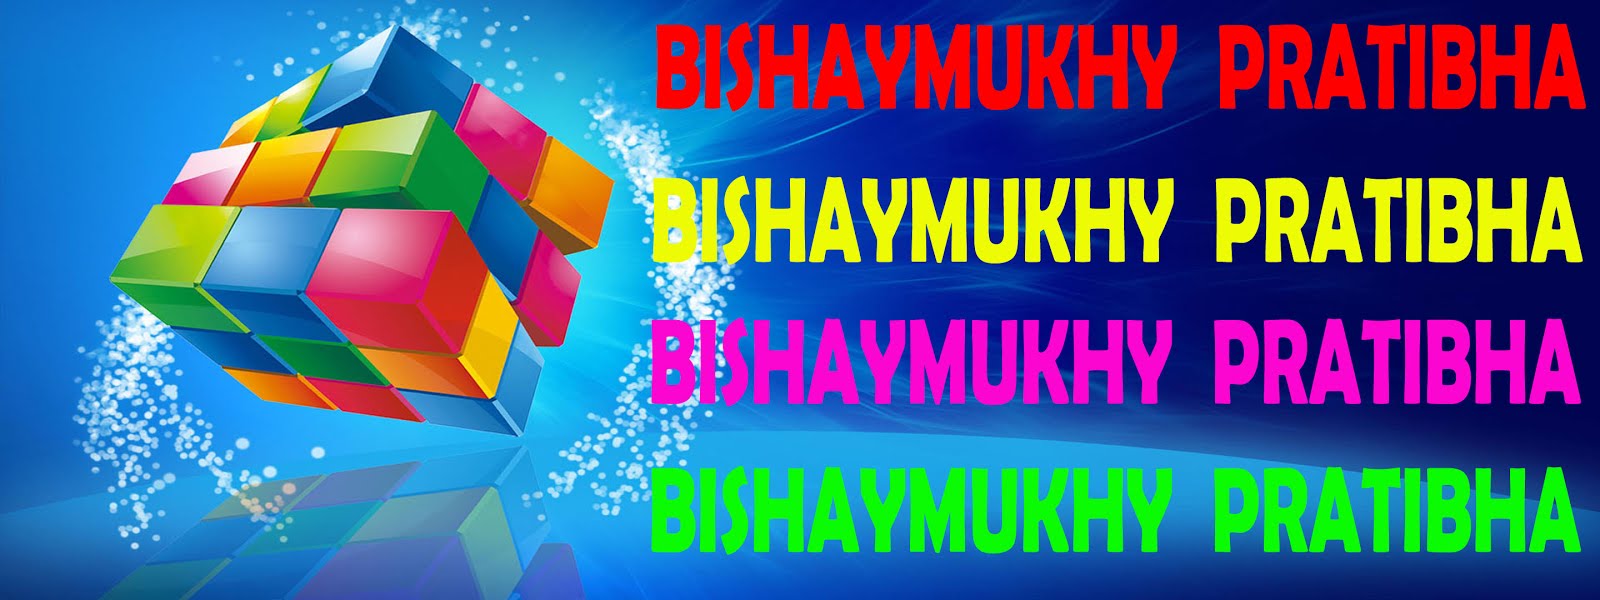 Bishay Pratibha Image Quiz Online